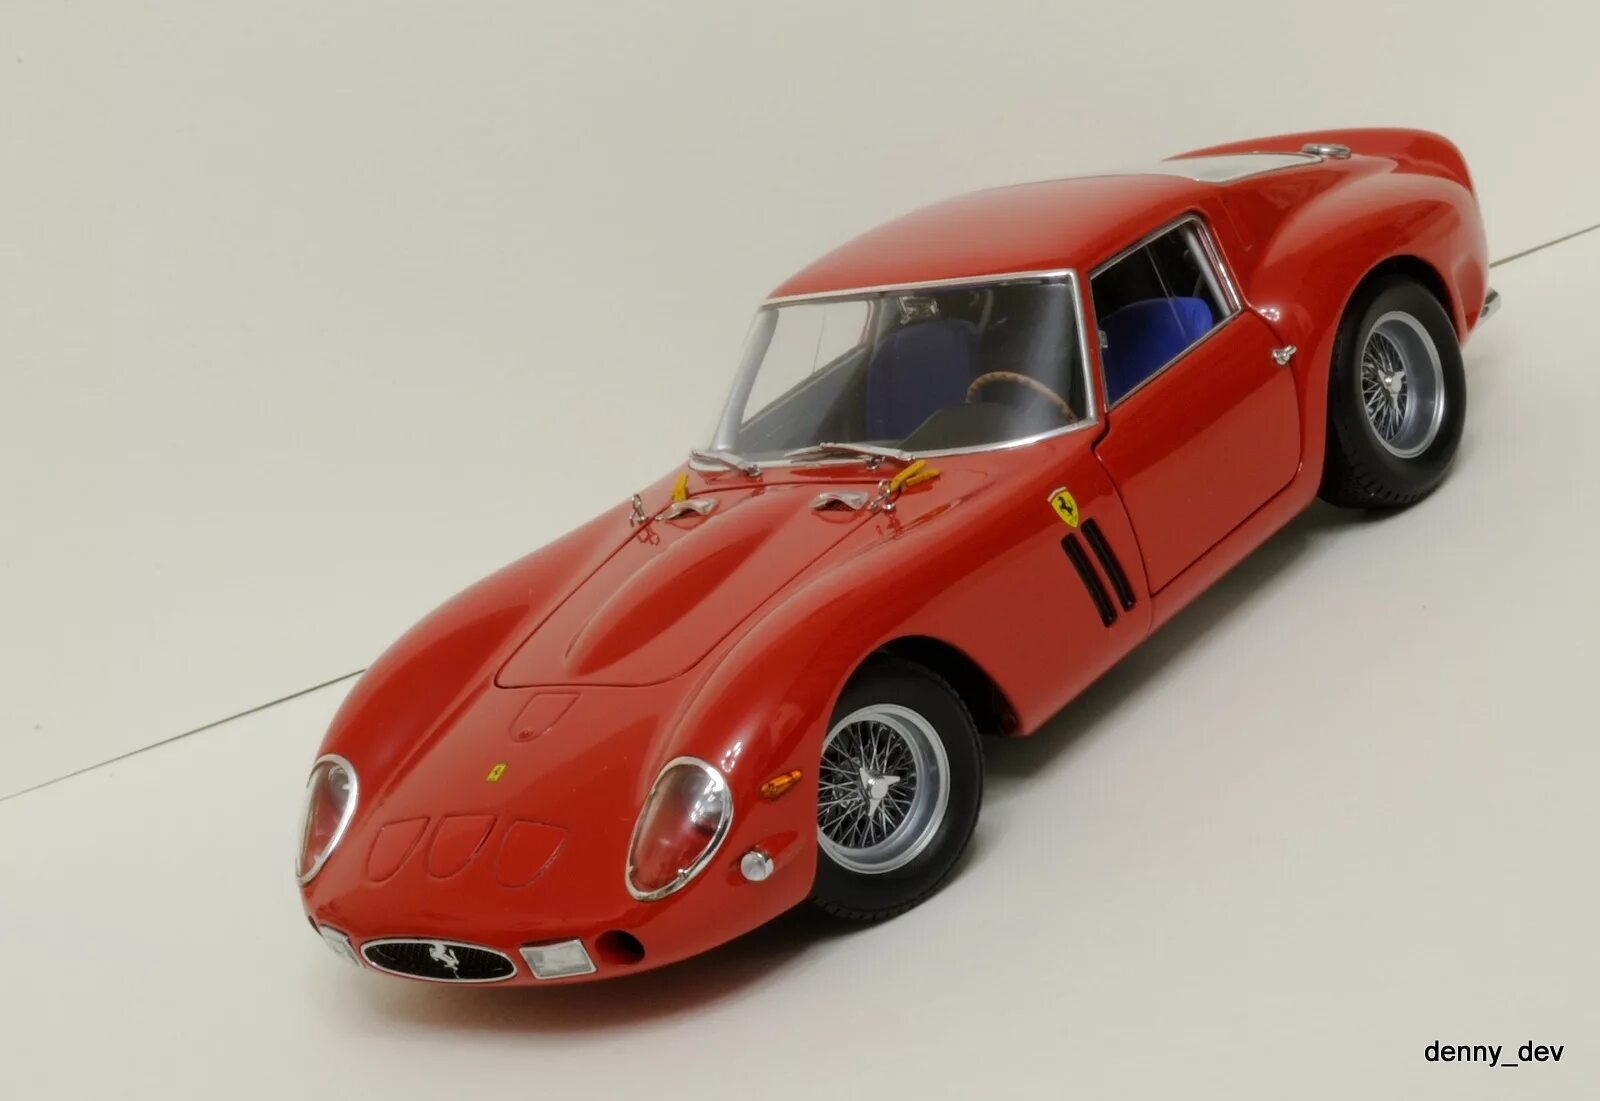 Ferrari gto 1962. 1962 Ferrari 250 GTO Kyosho. Ferrari 250 GTO 1962 года. Kyosho 1/43 Ferrari GTO. Феррари 250 LM Моделист.